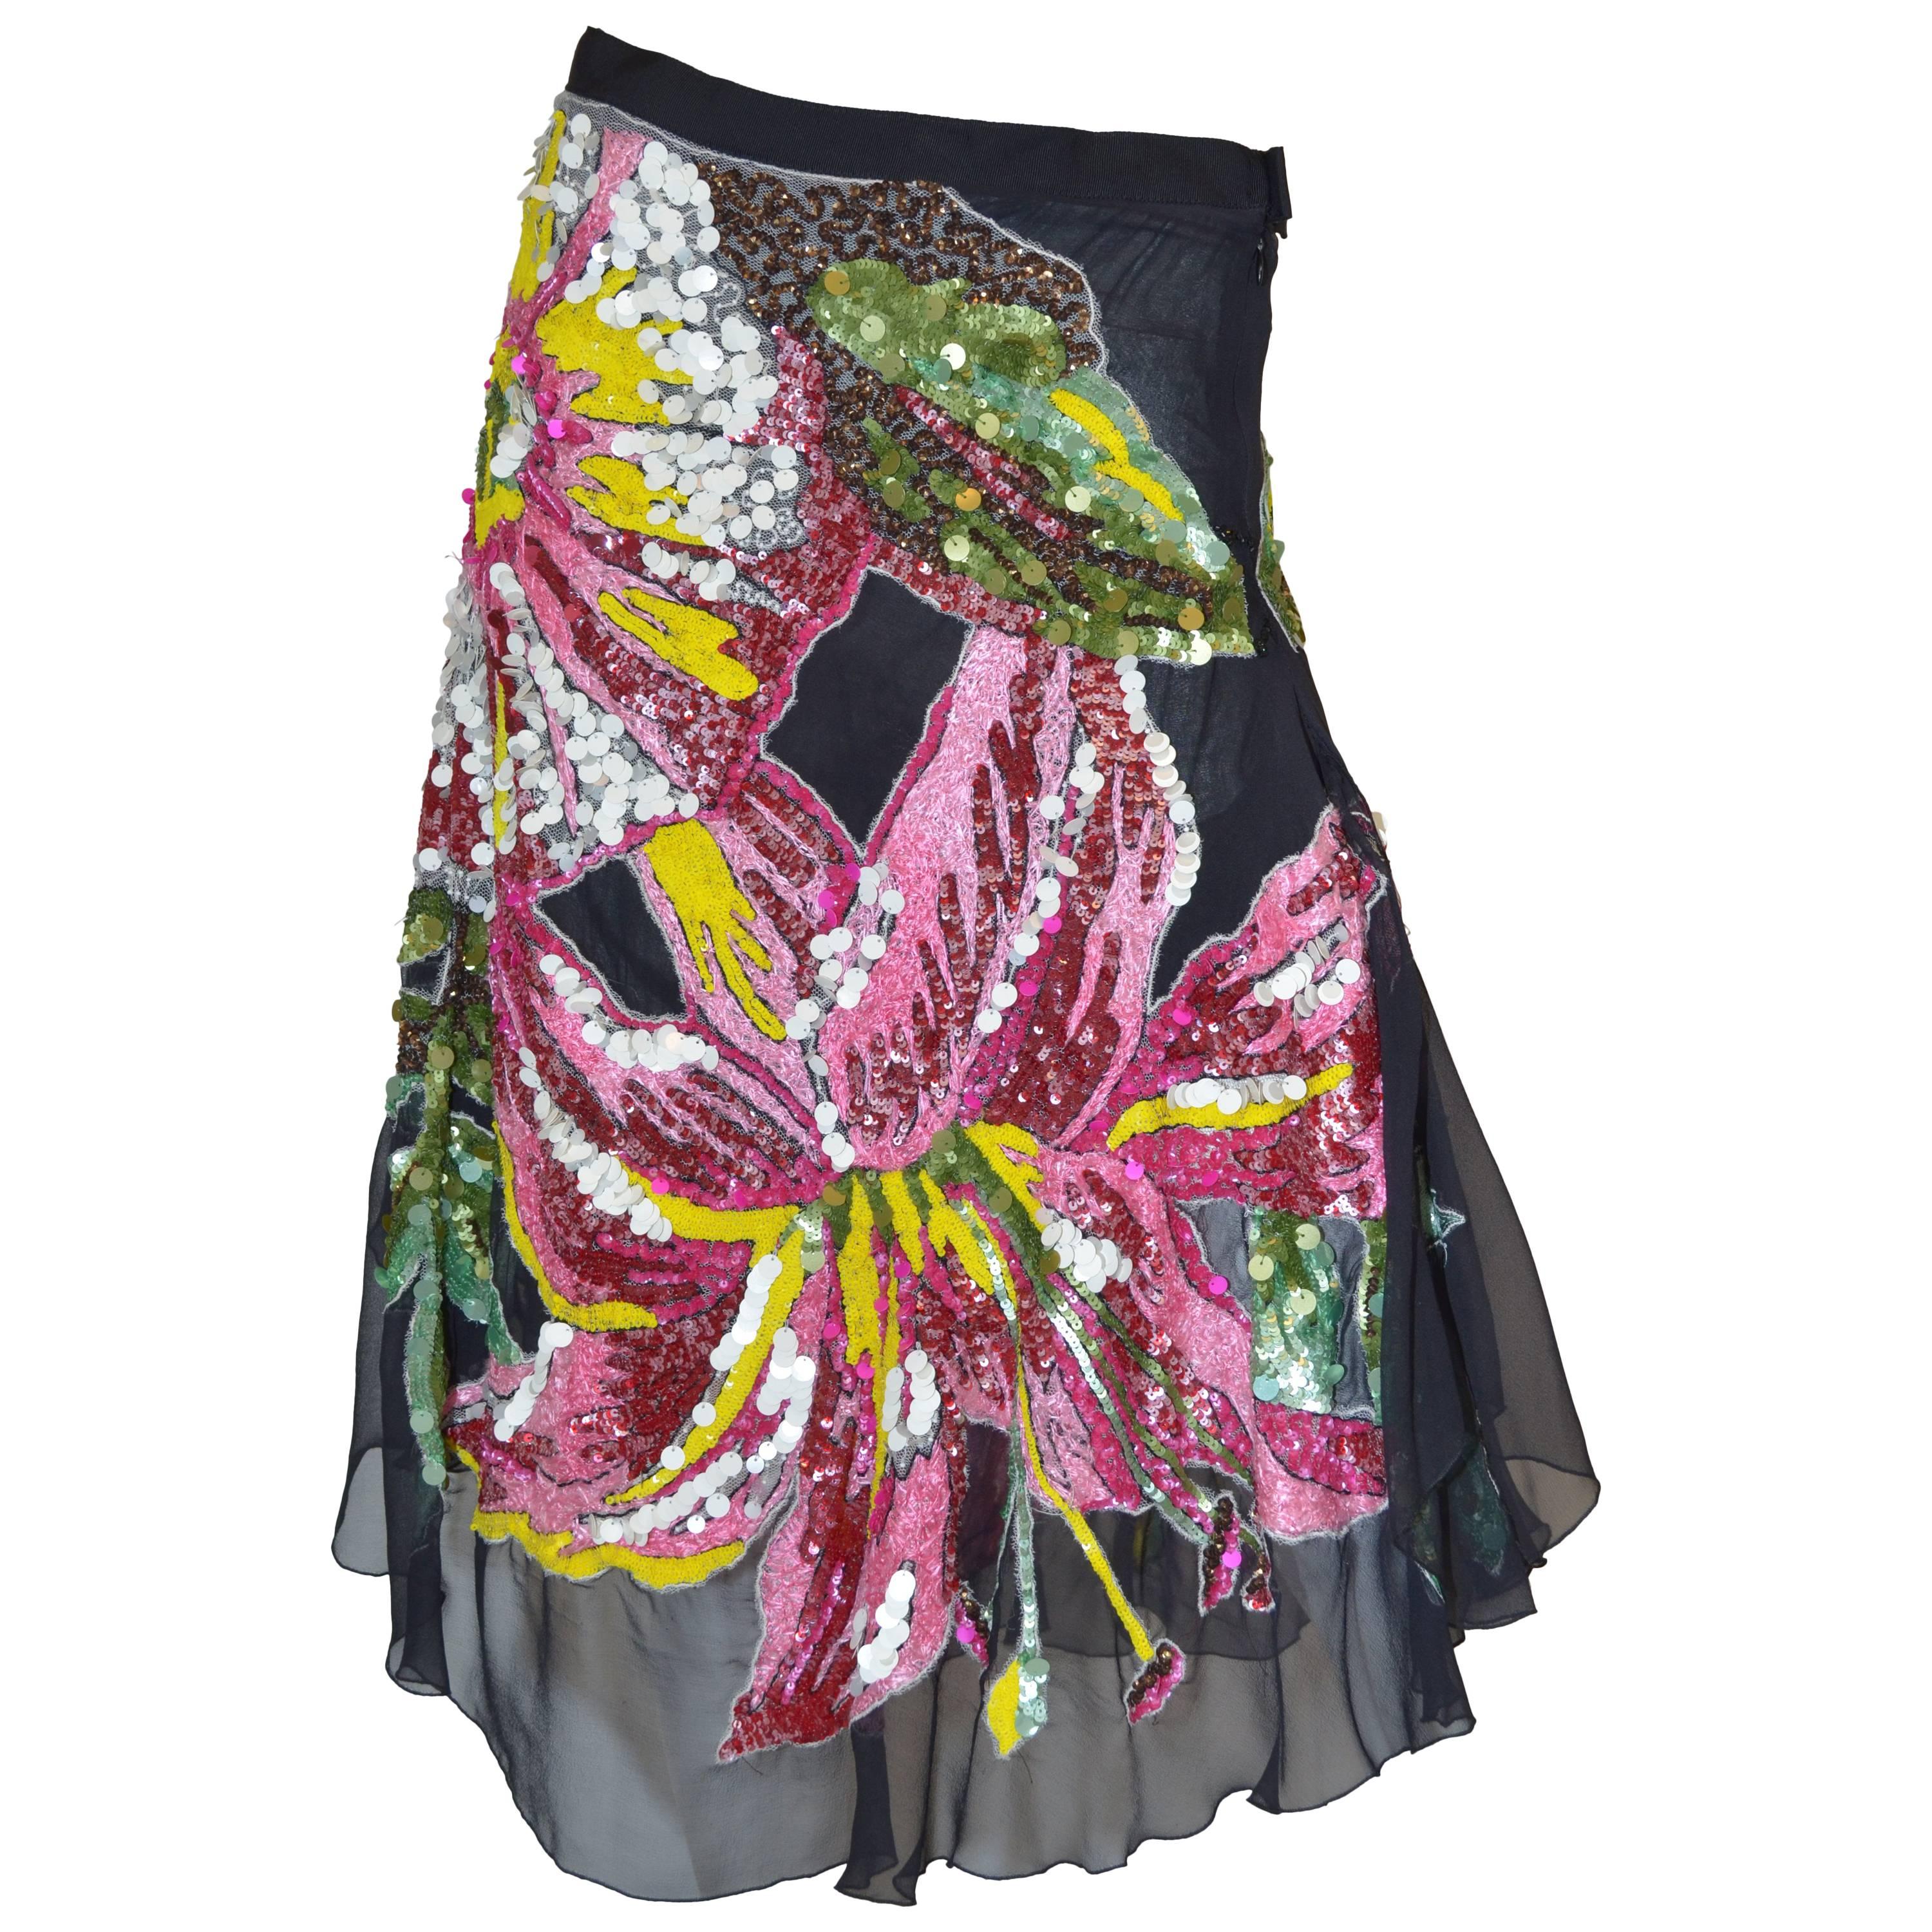 Amen Multi-Colored Sequins Floral Skirt